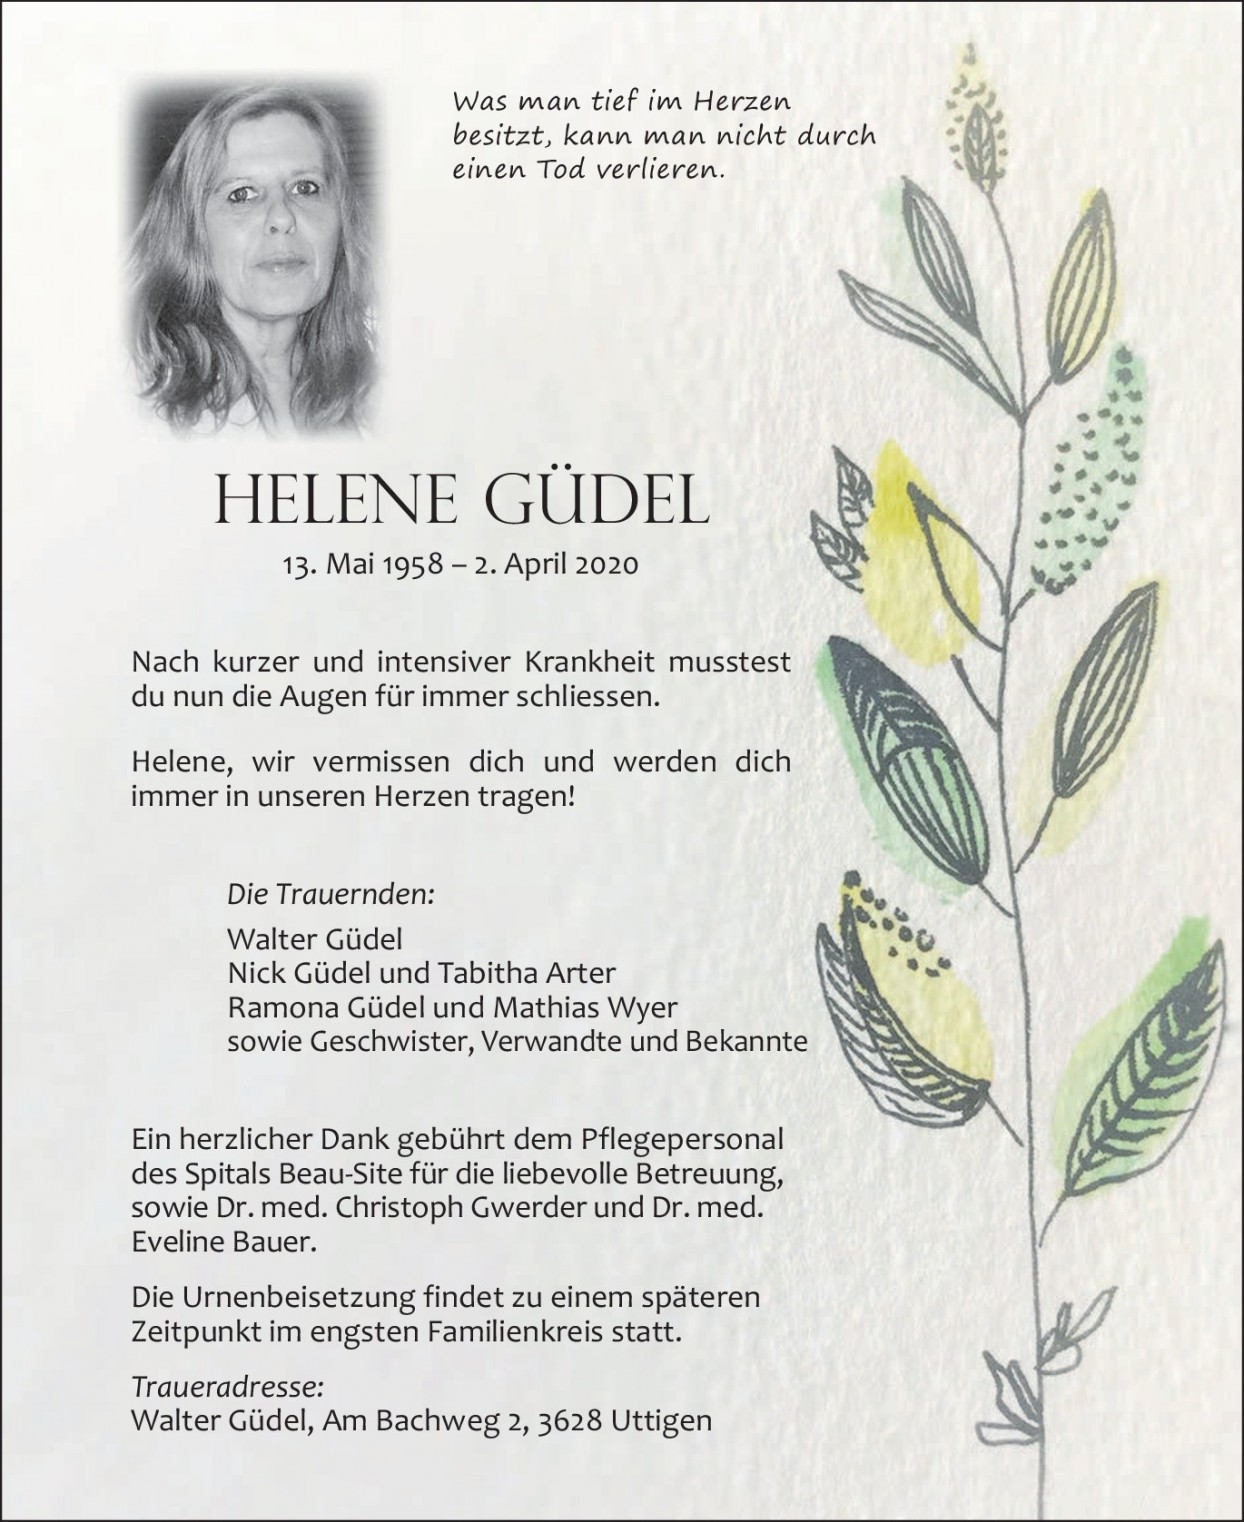 Helene Güdel